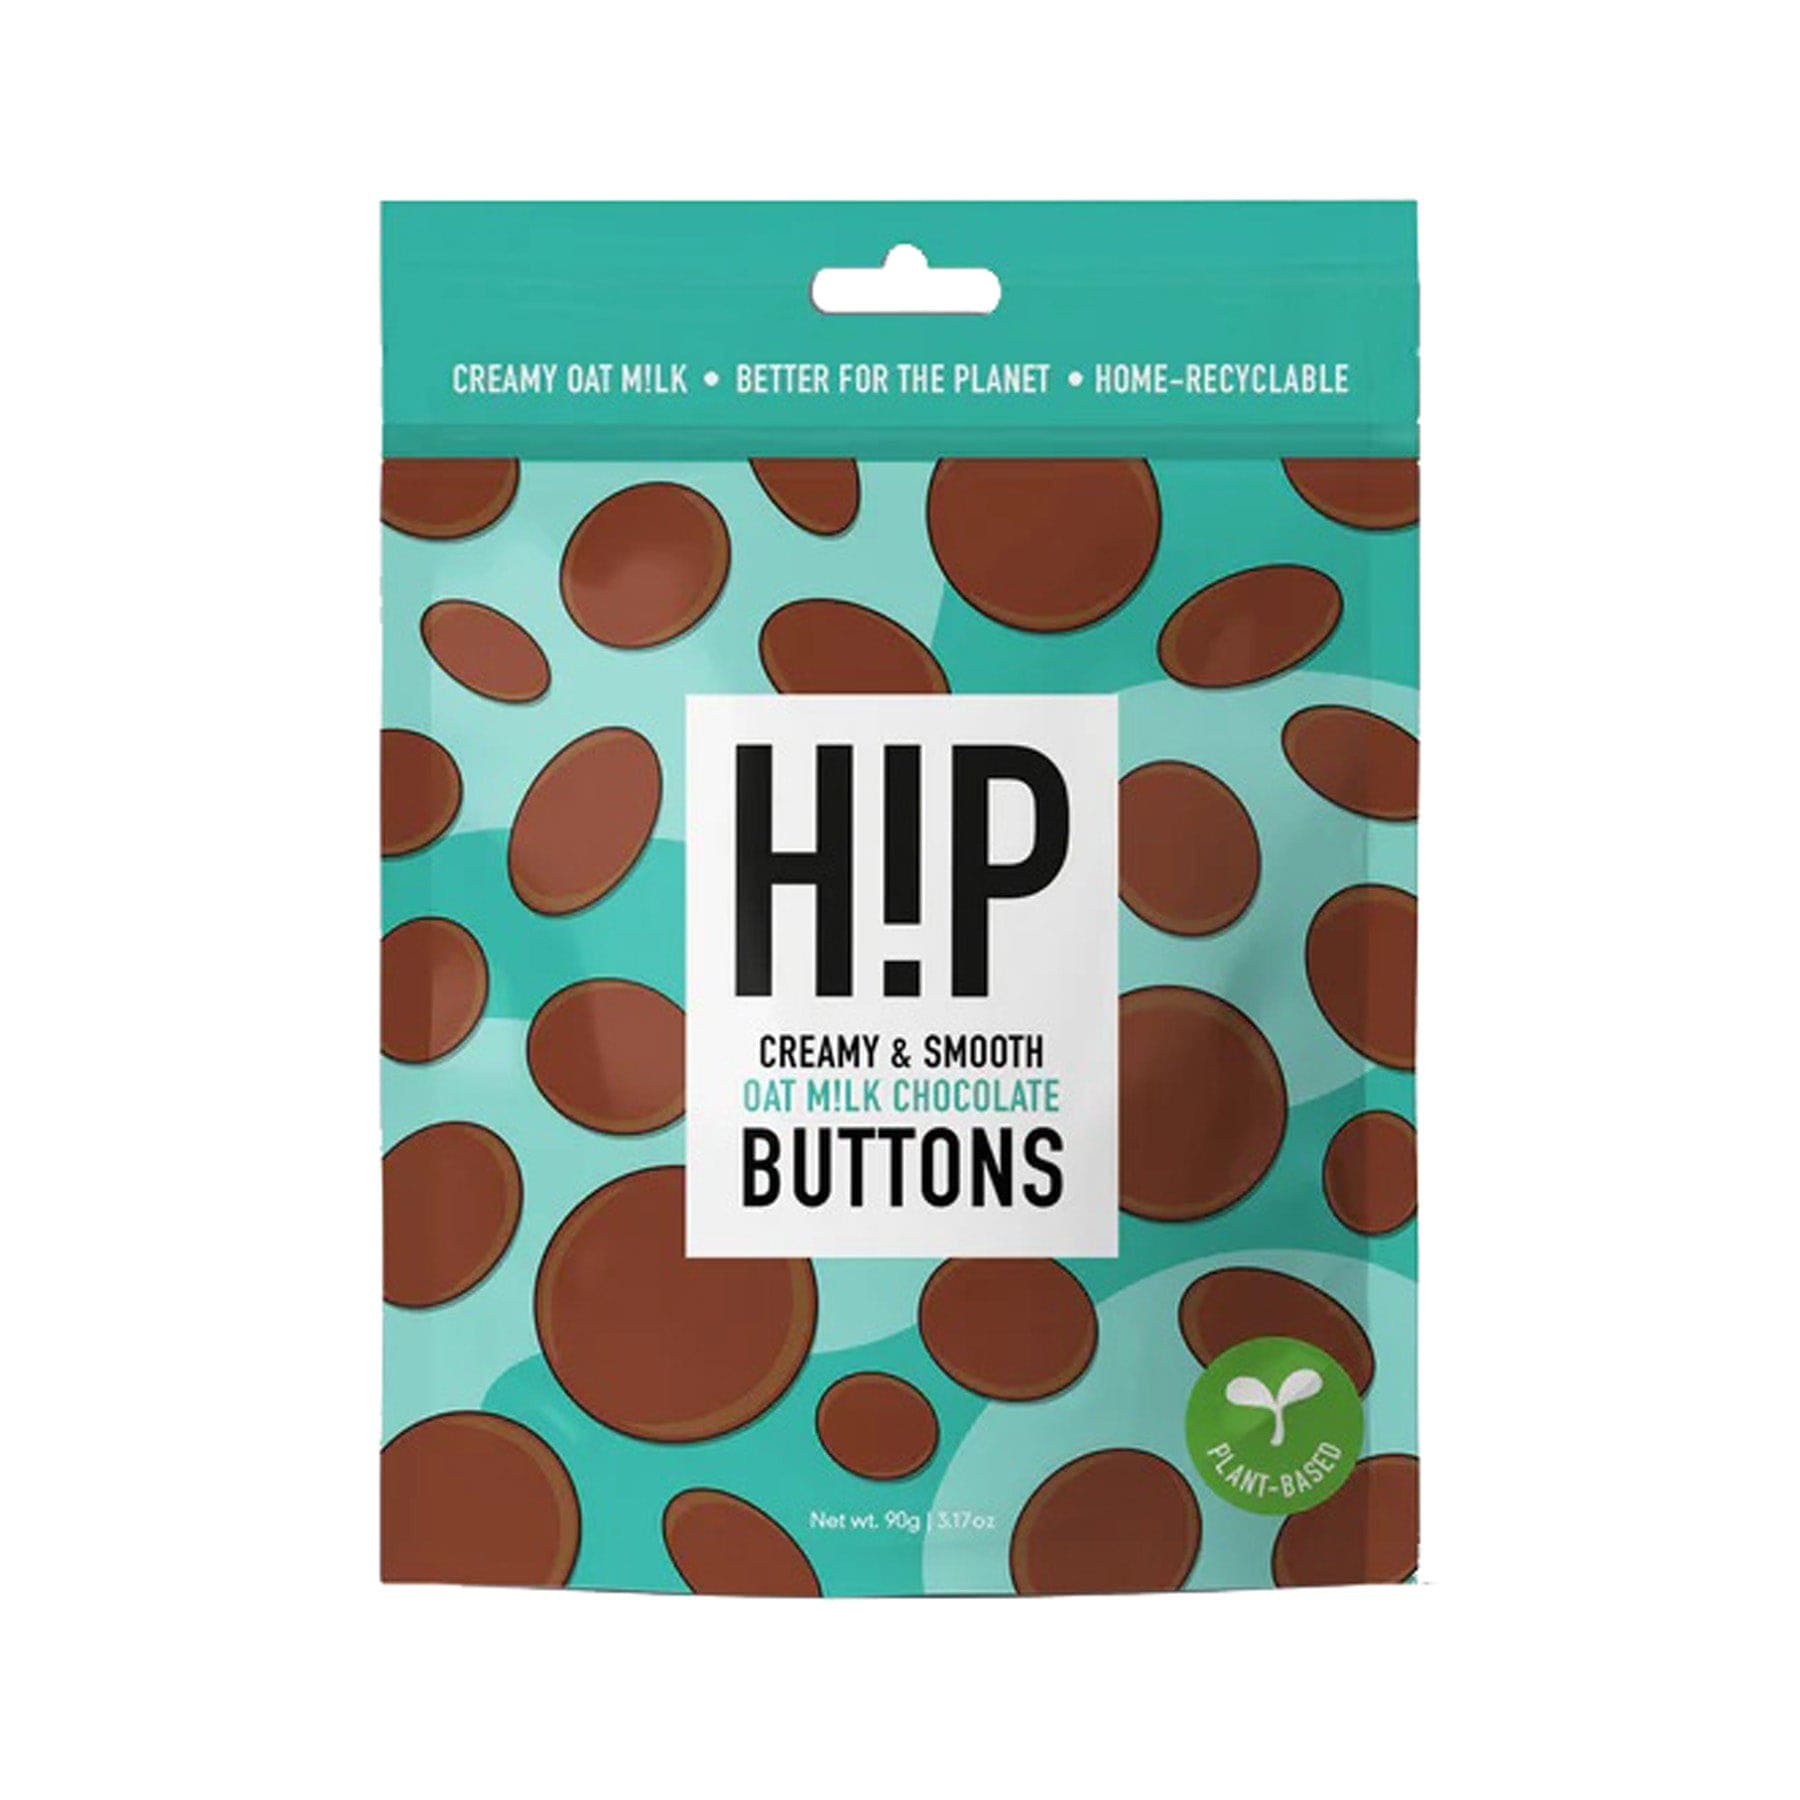 H!p oat milk chocolate buttons 90g